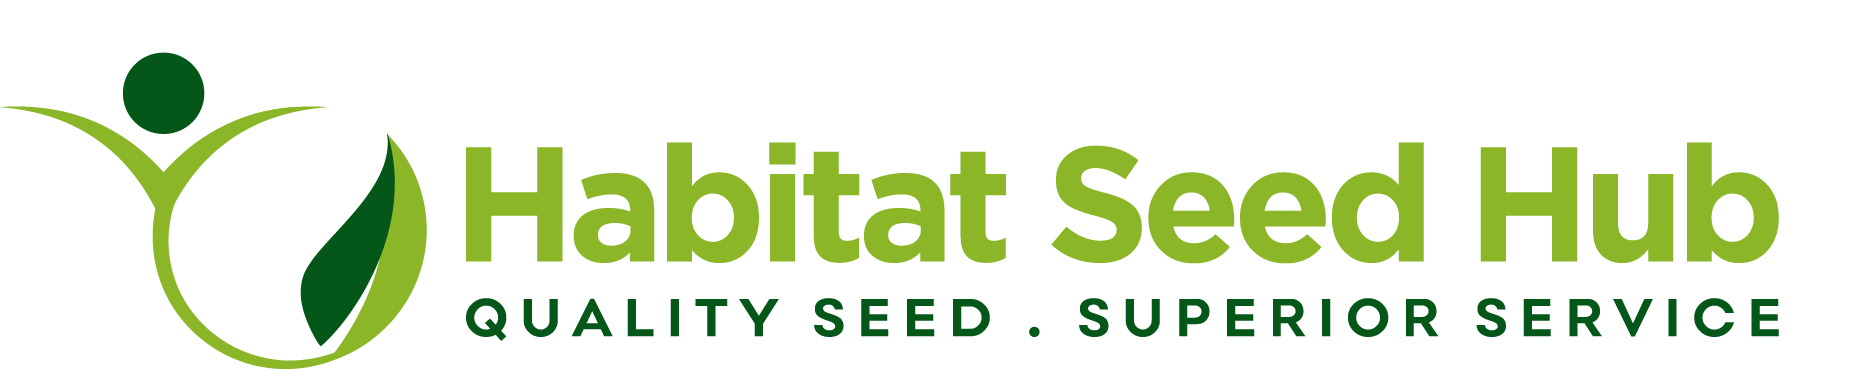 Habitat Seed Hub Logo